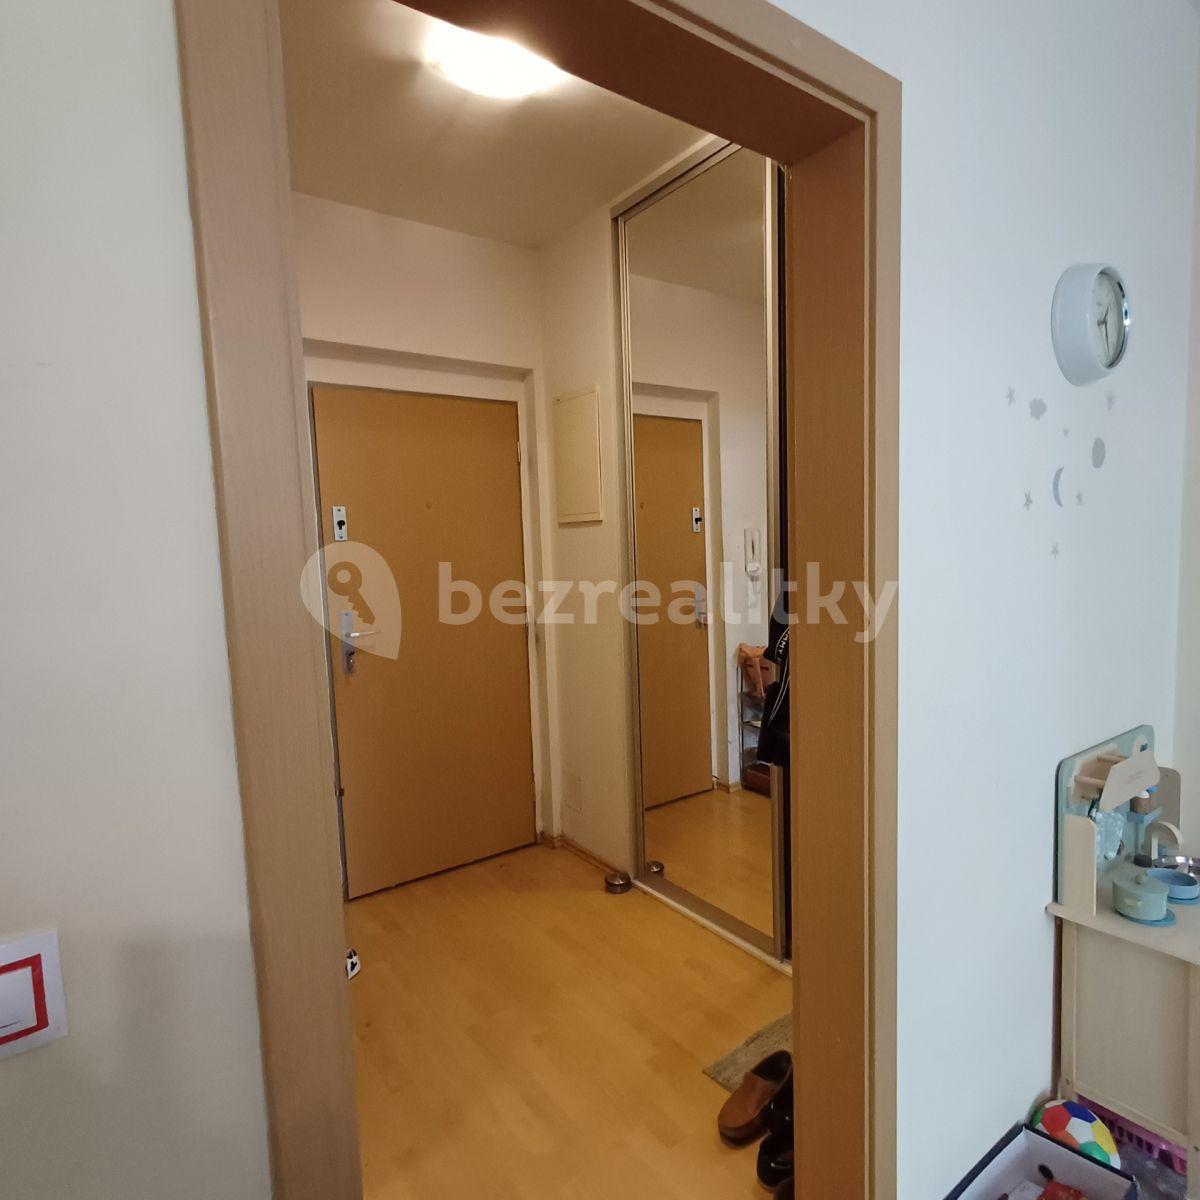 2 bedroom with open-plan kitchen flat for sale, 65 m², Vladycká, Prague, Prague